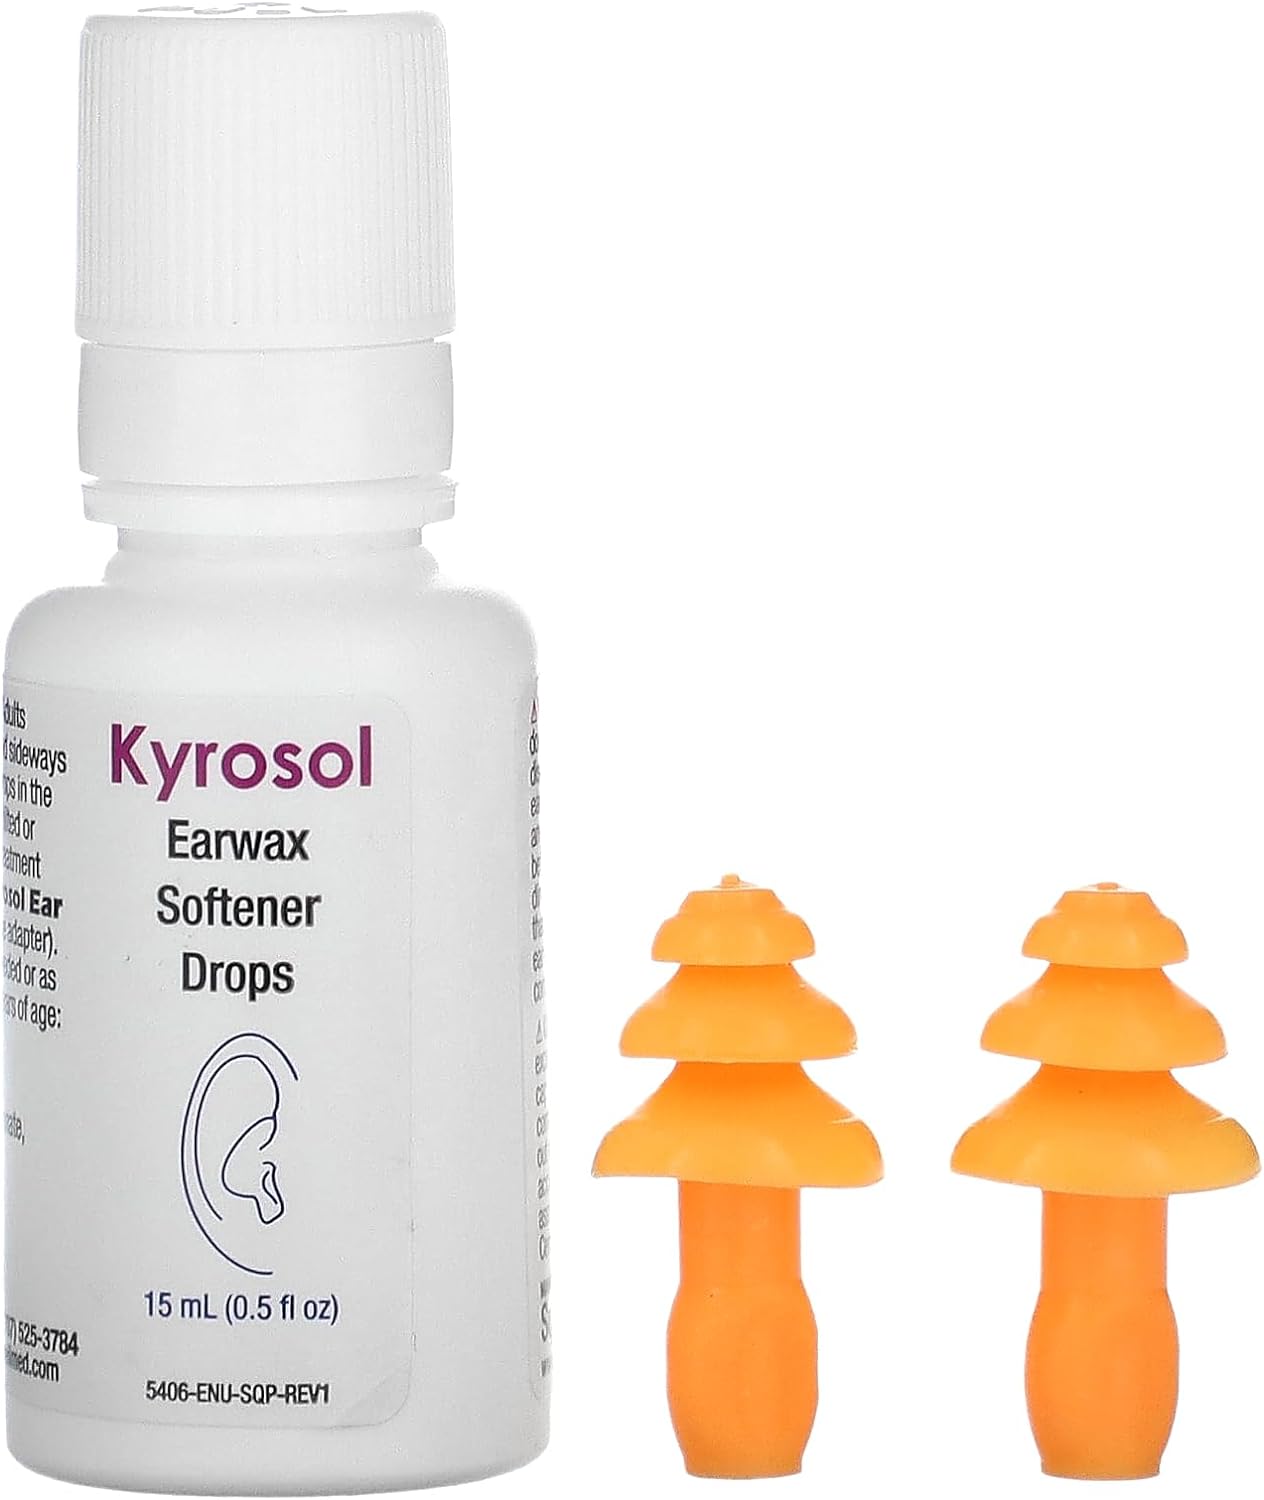 Squip Kyrosol All Natural Ear Wax Removal Drops Refill, 20.0 Ounce 0.51 Fl Oz